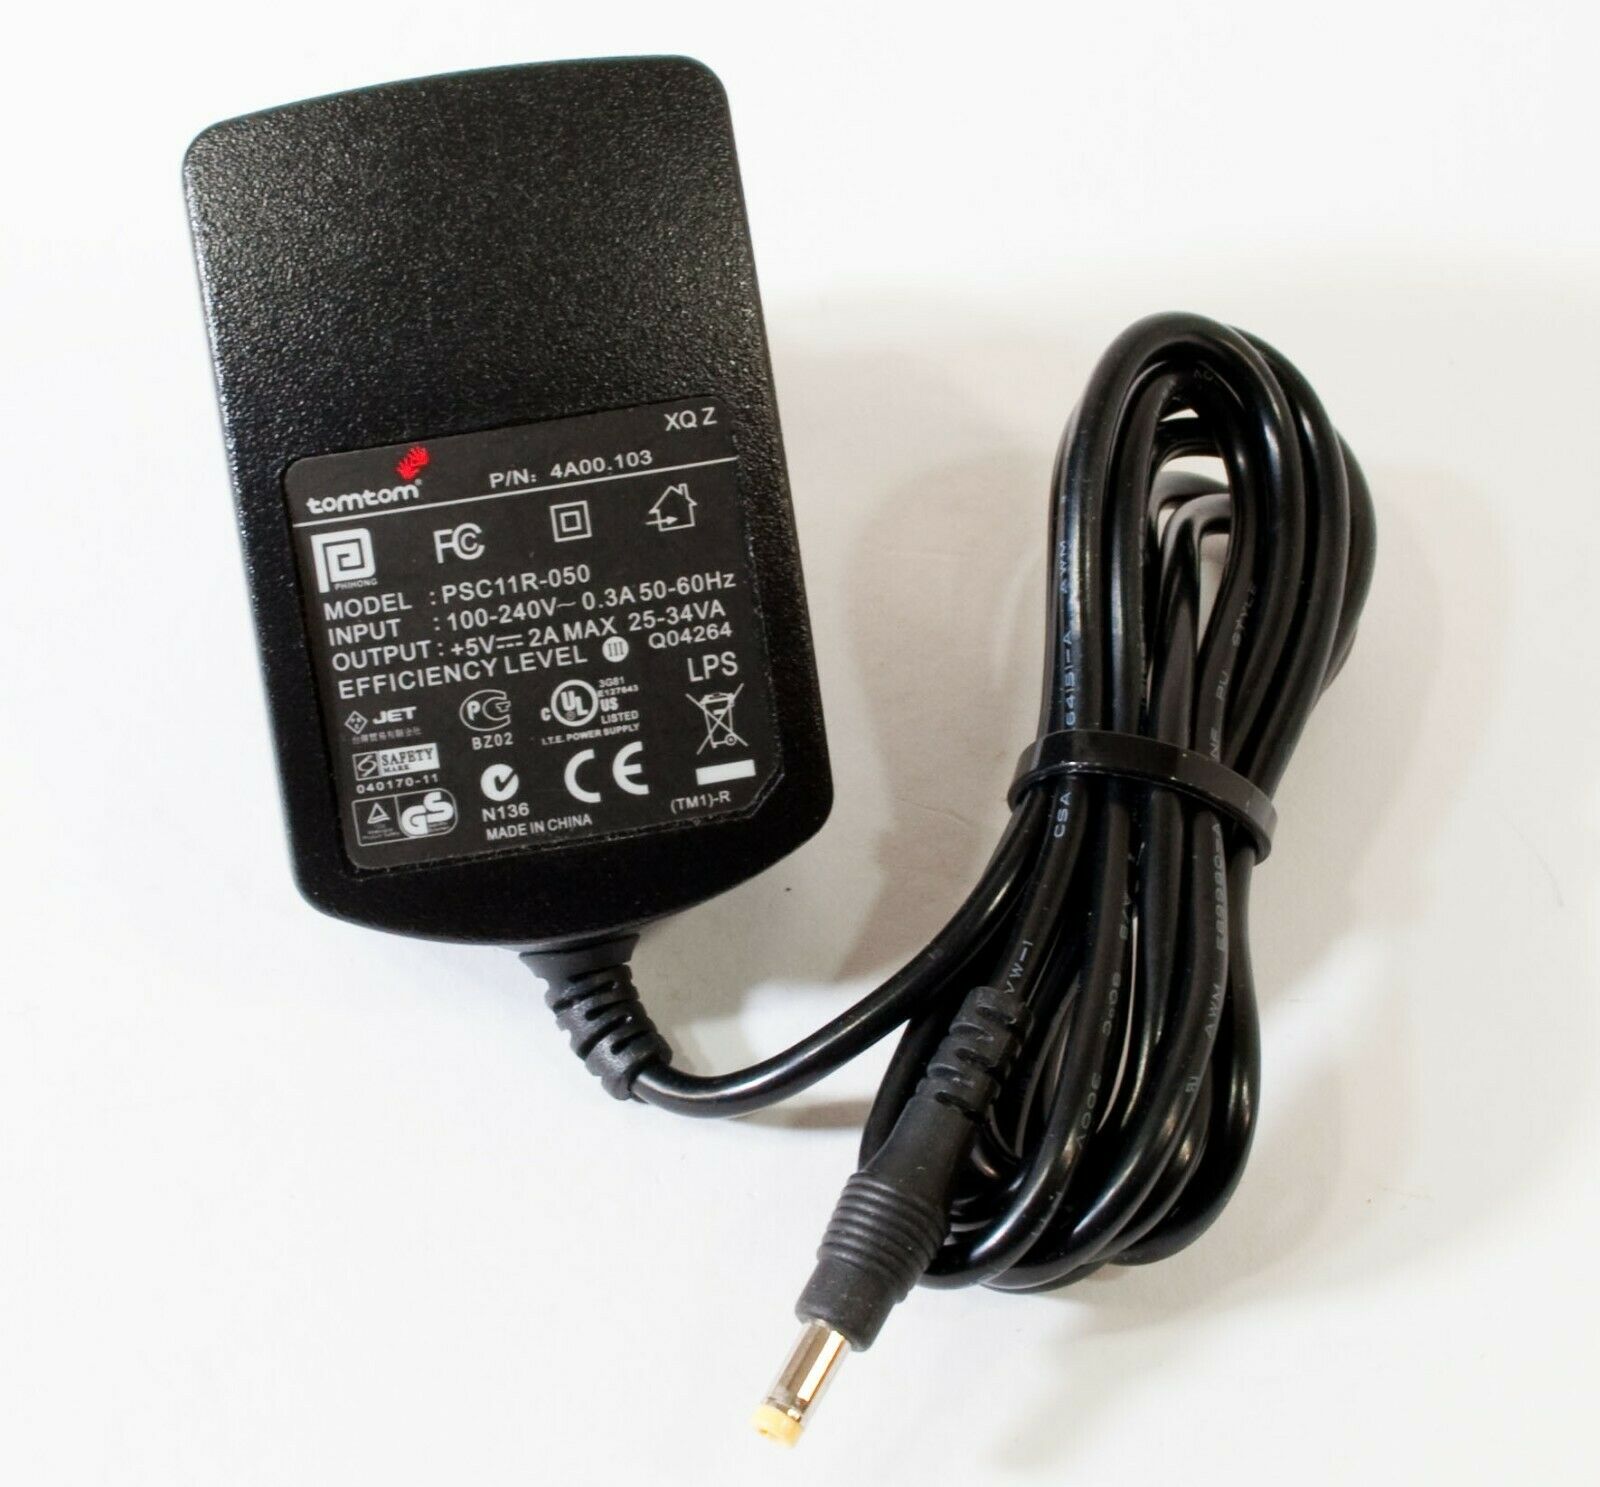 TomTom PSC11R-050 AC Adapter 5V 2A Original Charger Power Supply Europlug Output - Click Image to Close